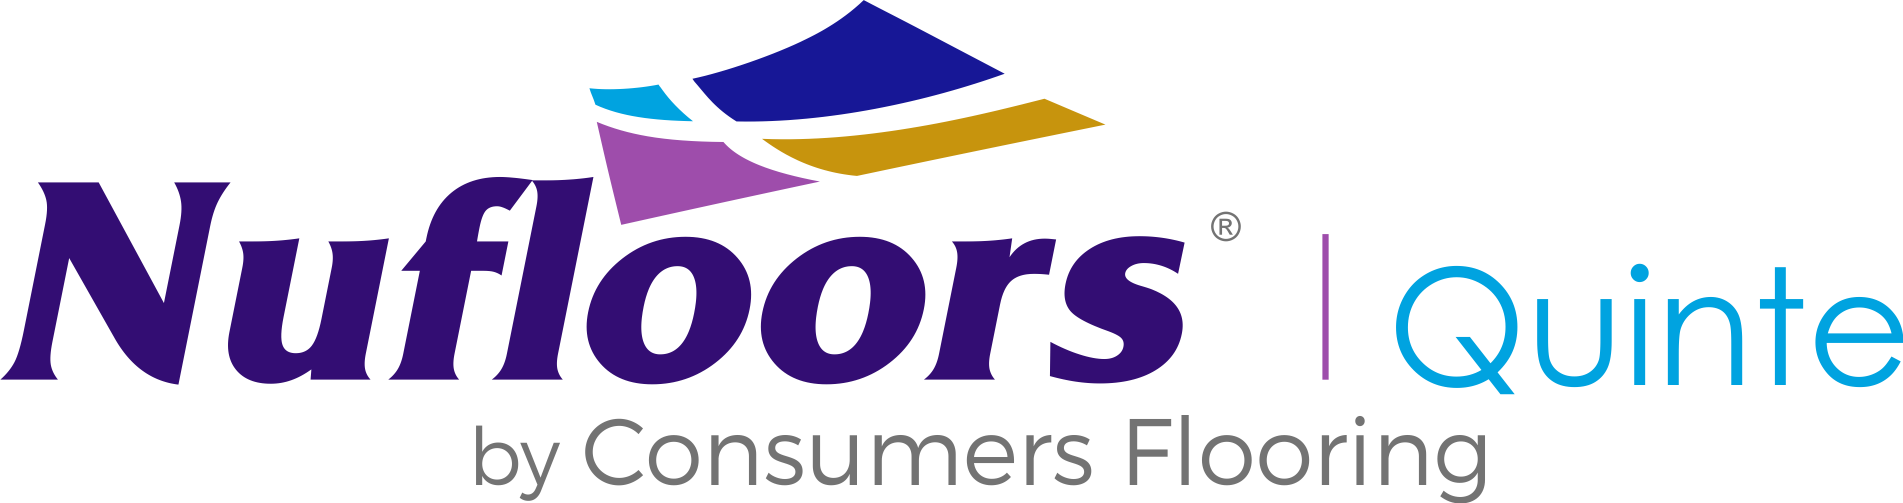 Nufloors Logo